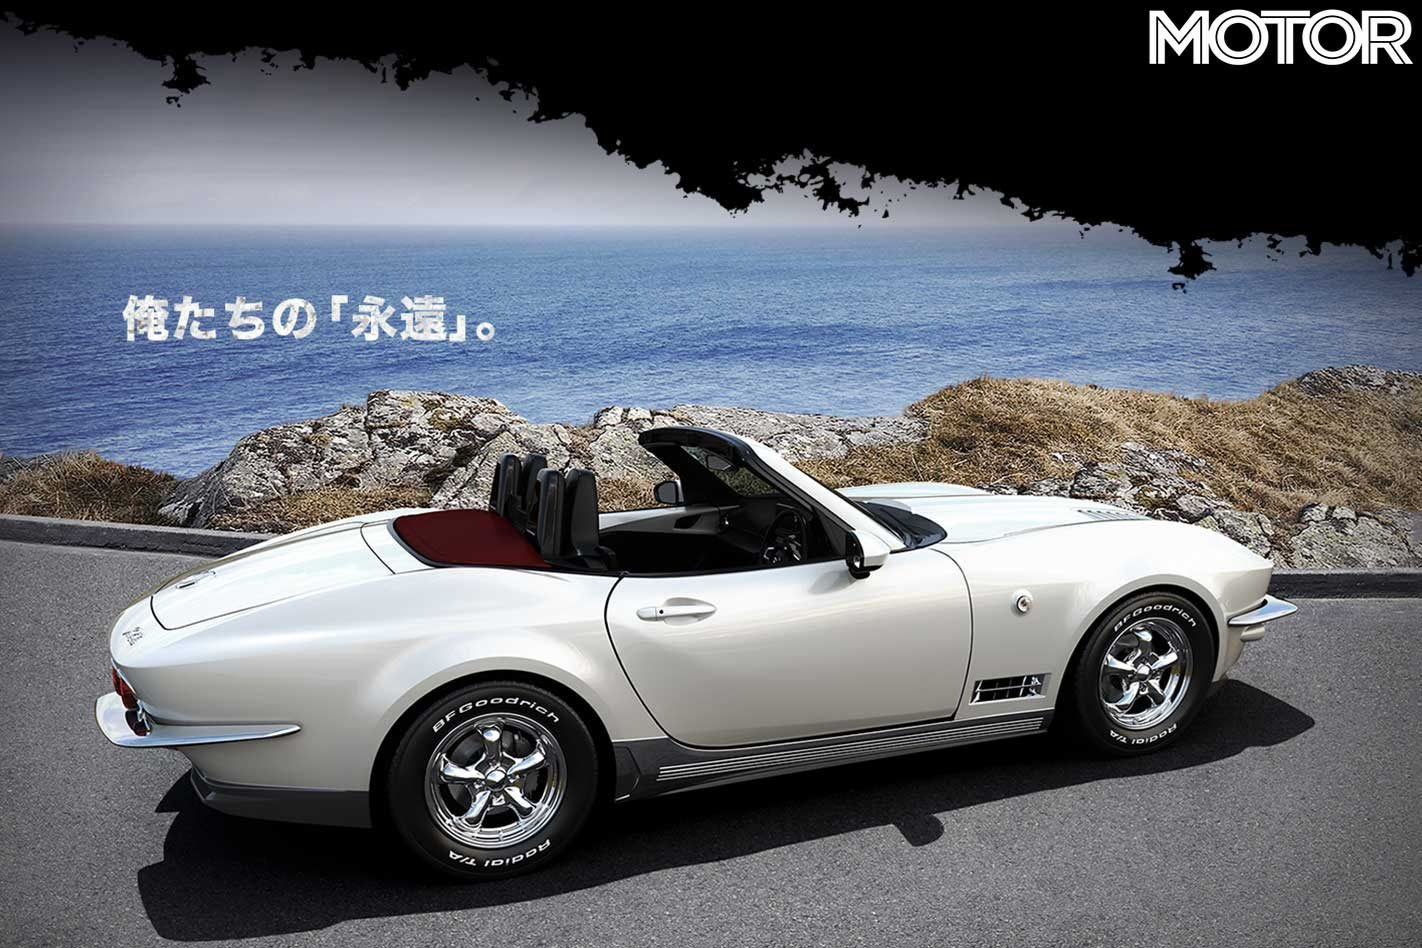 Hãng độ Mitsuoka biến Mazda MX-5 Miata thành Corvette Stingray